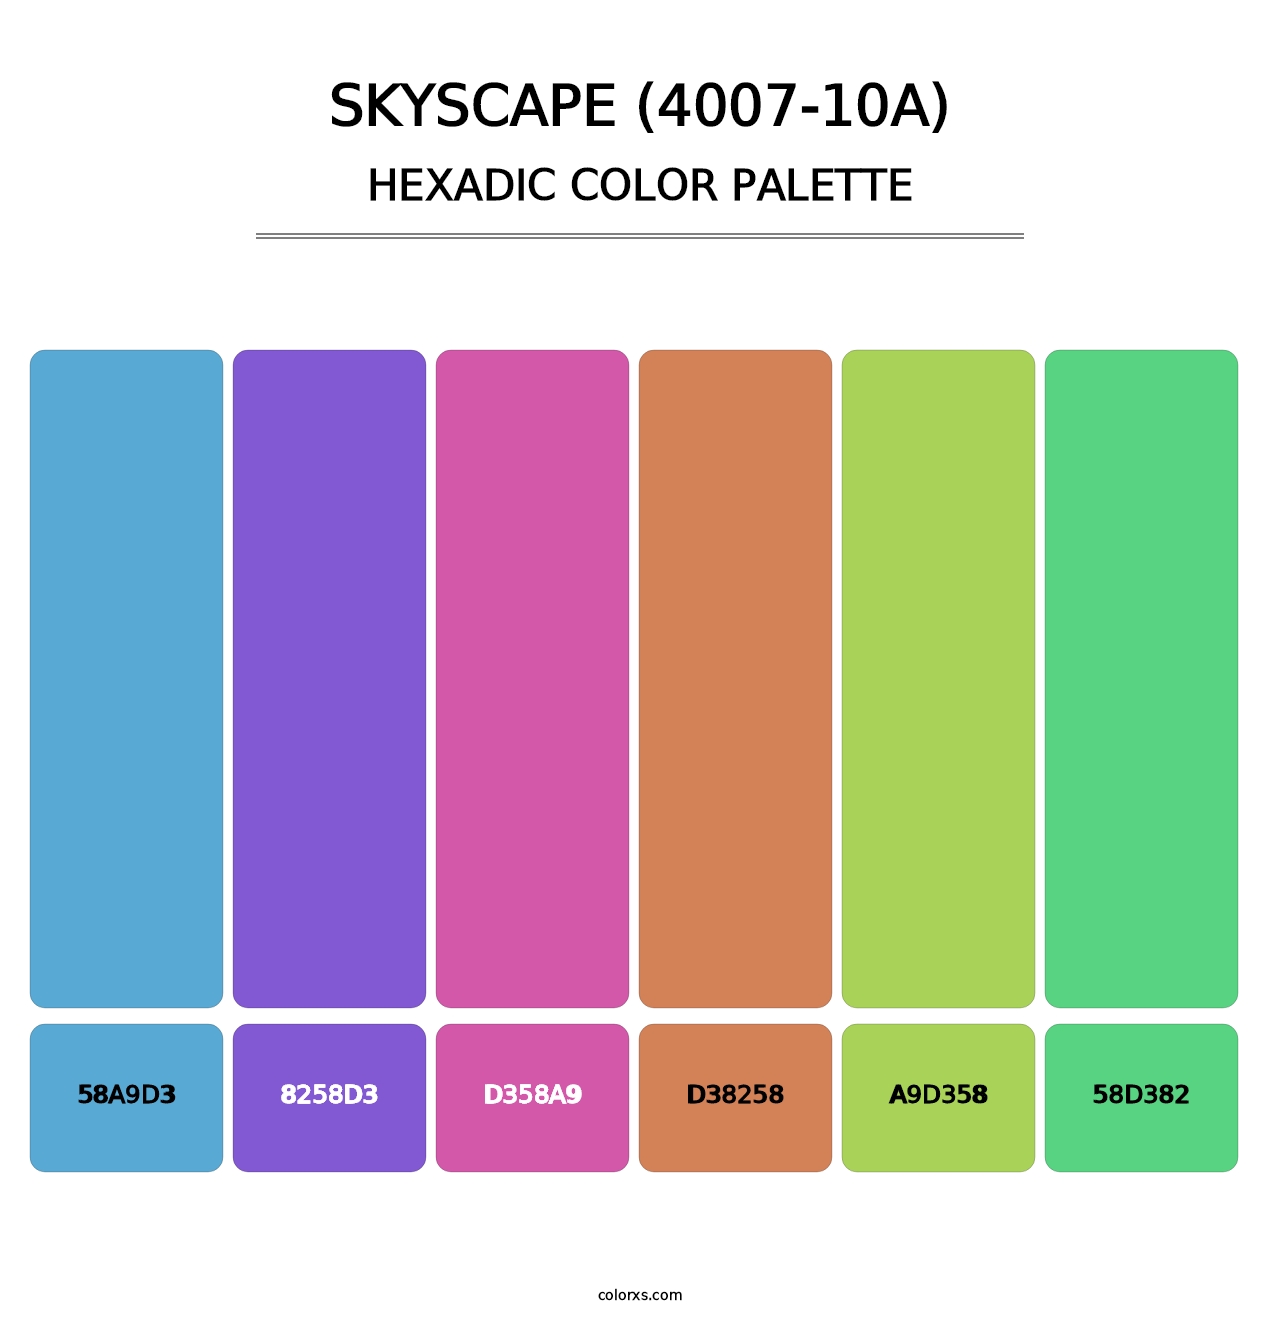 Skyscape (4007-10A) - Hexadic Color Palette